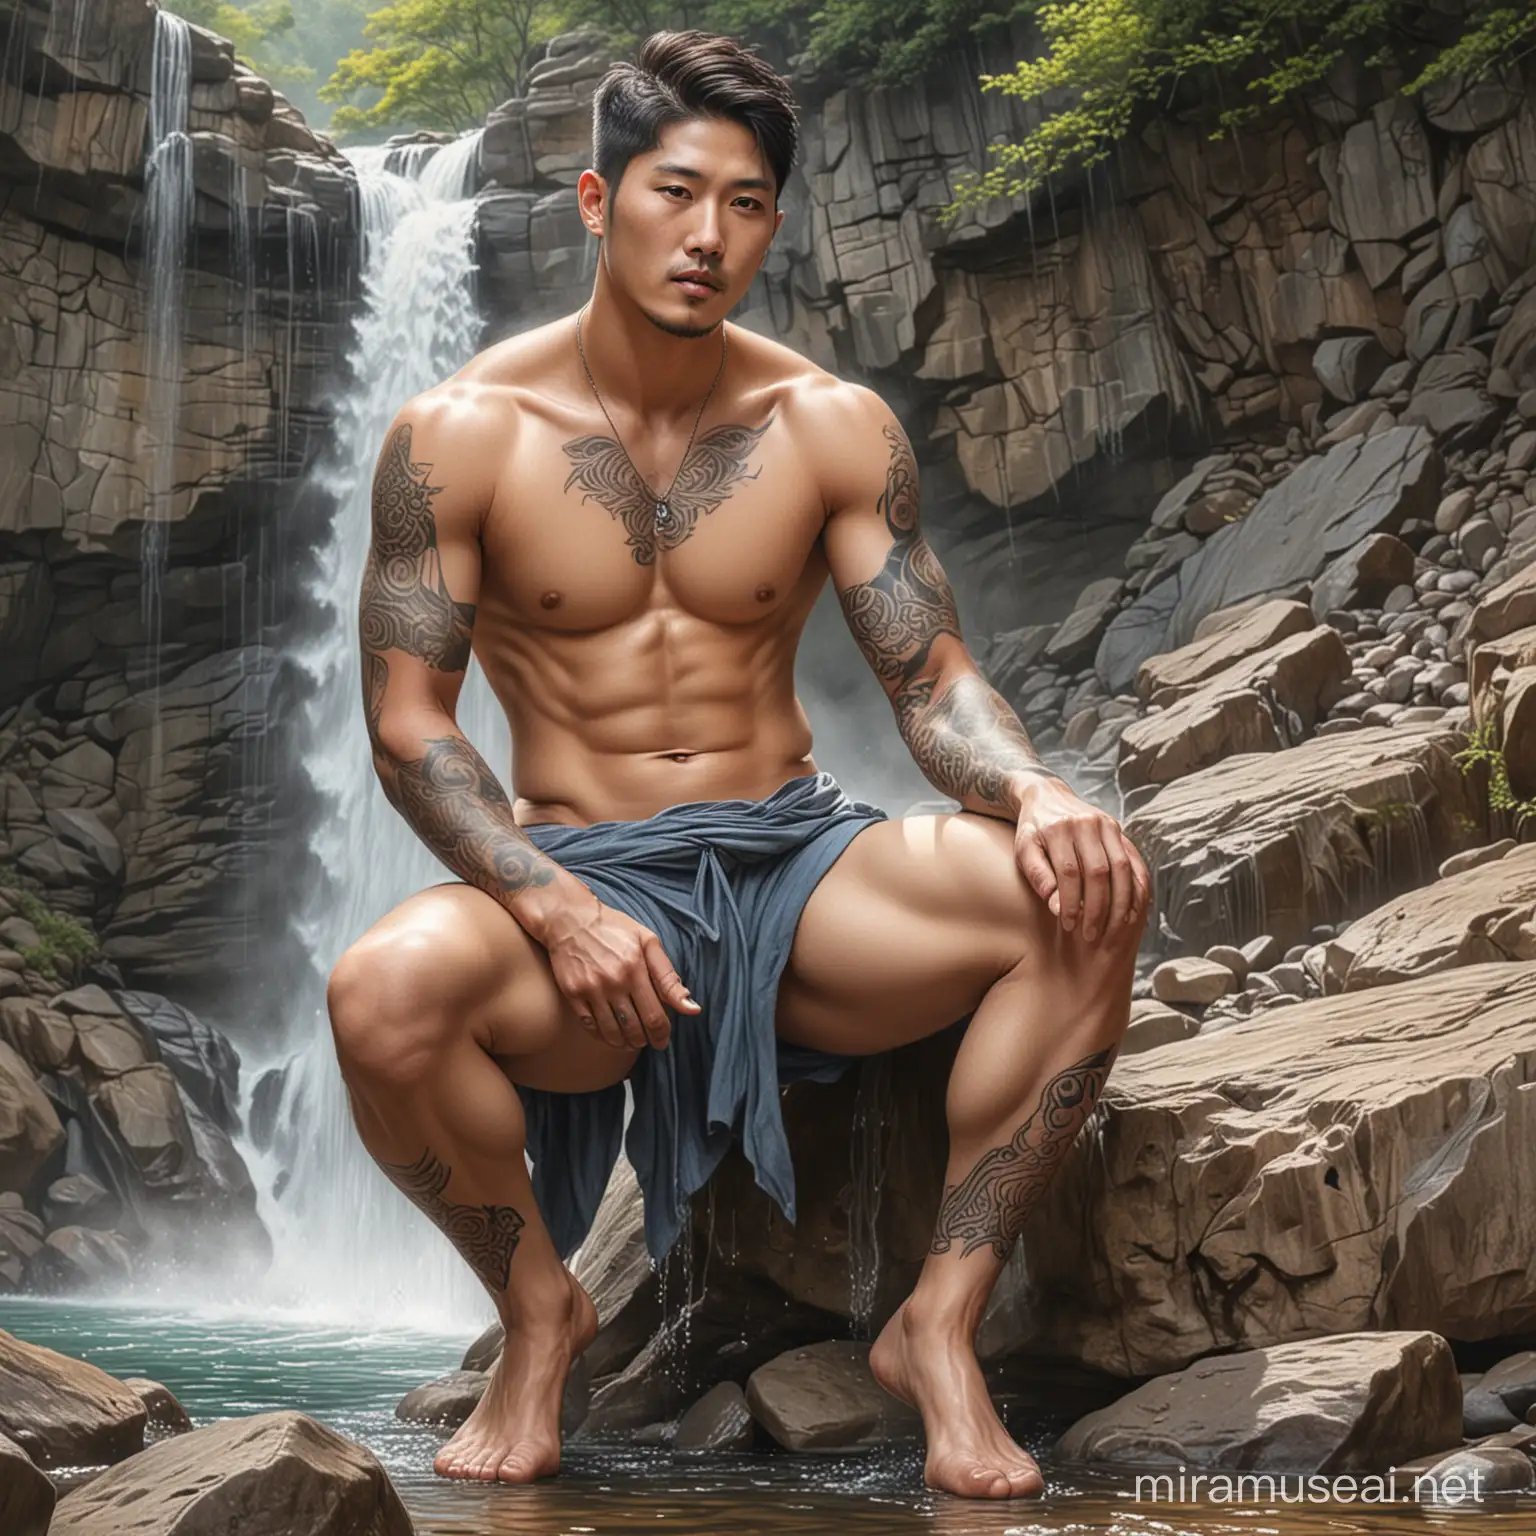 Muscular Korean Man with Tattoos Standing at Waterfall